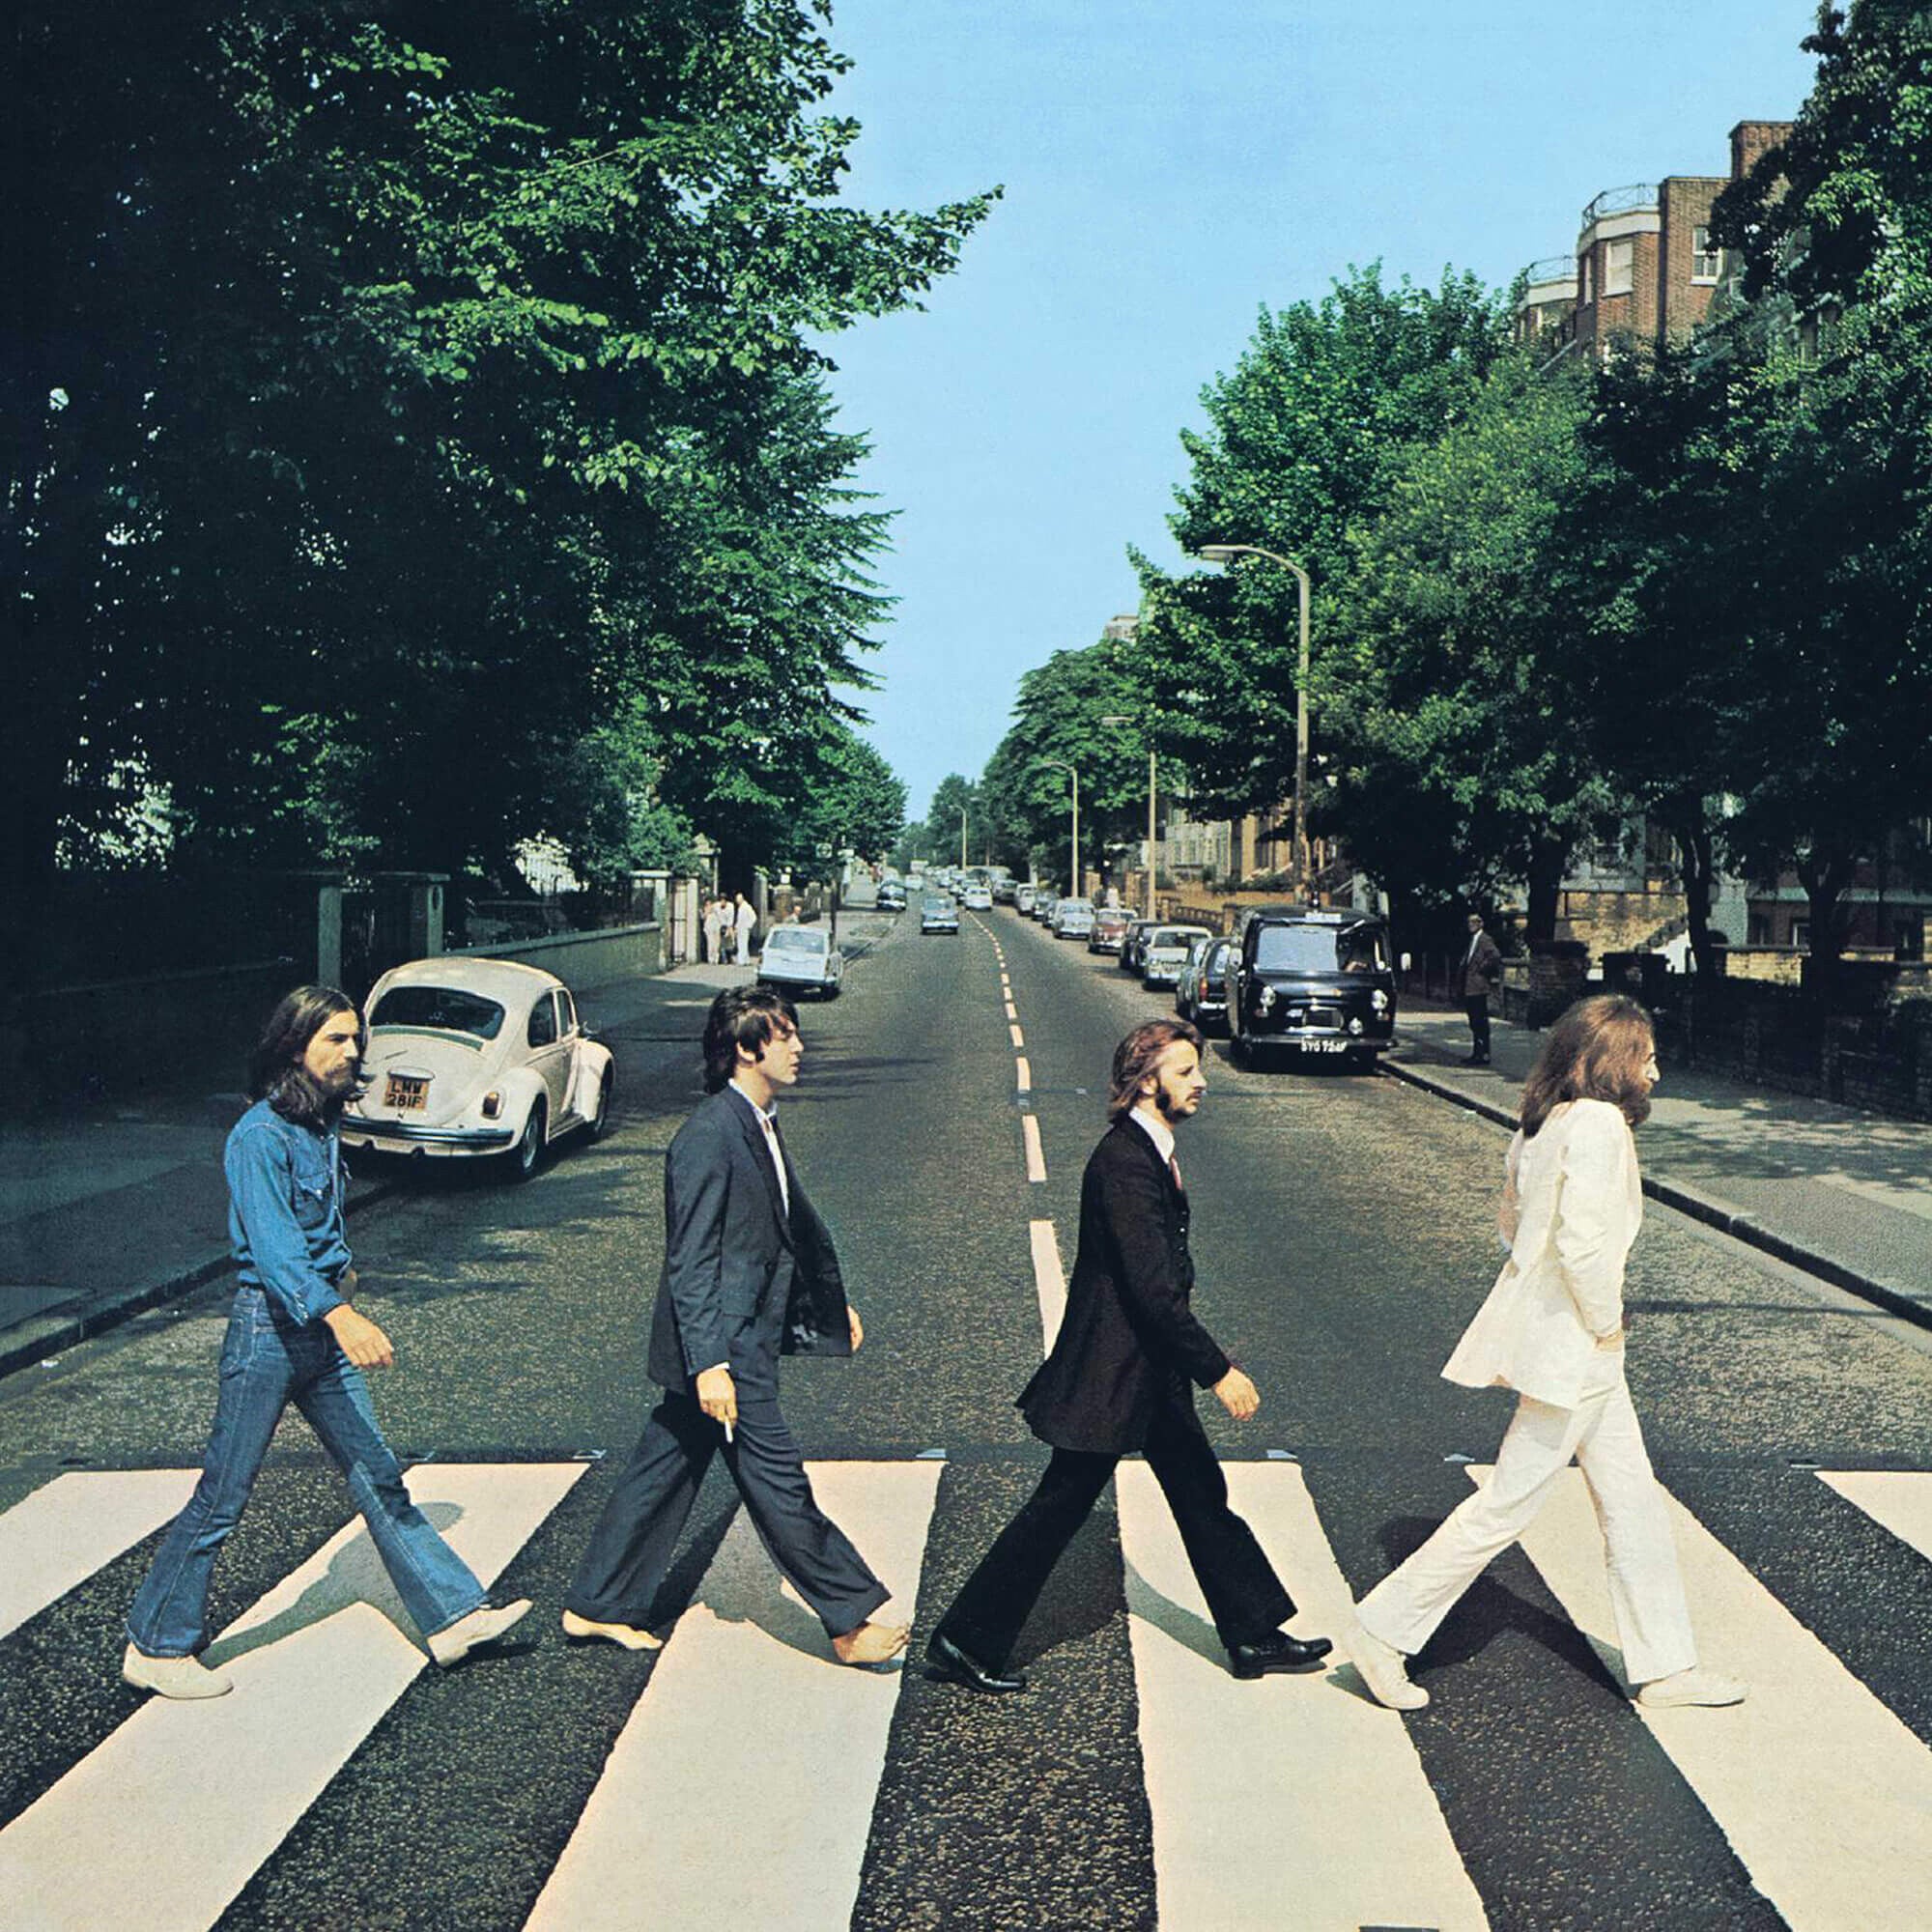 https://images.bravado.de/prod/product-assets/product-asset-data/beatles-the/the-beatles-international-1/products/130635/web/291964/image-thumb__291964__3000x3000_original/The-Beatles-Abbey-Road-Anniversary-Edition-Ltd-1LP-Picture-Disc-Vinyl-130635-291964.jpg